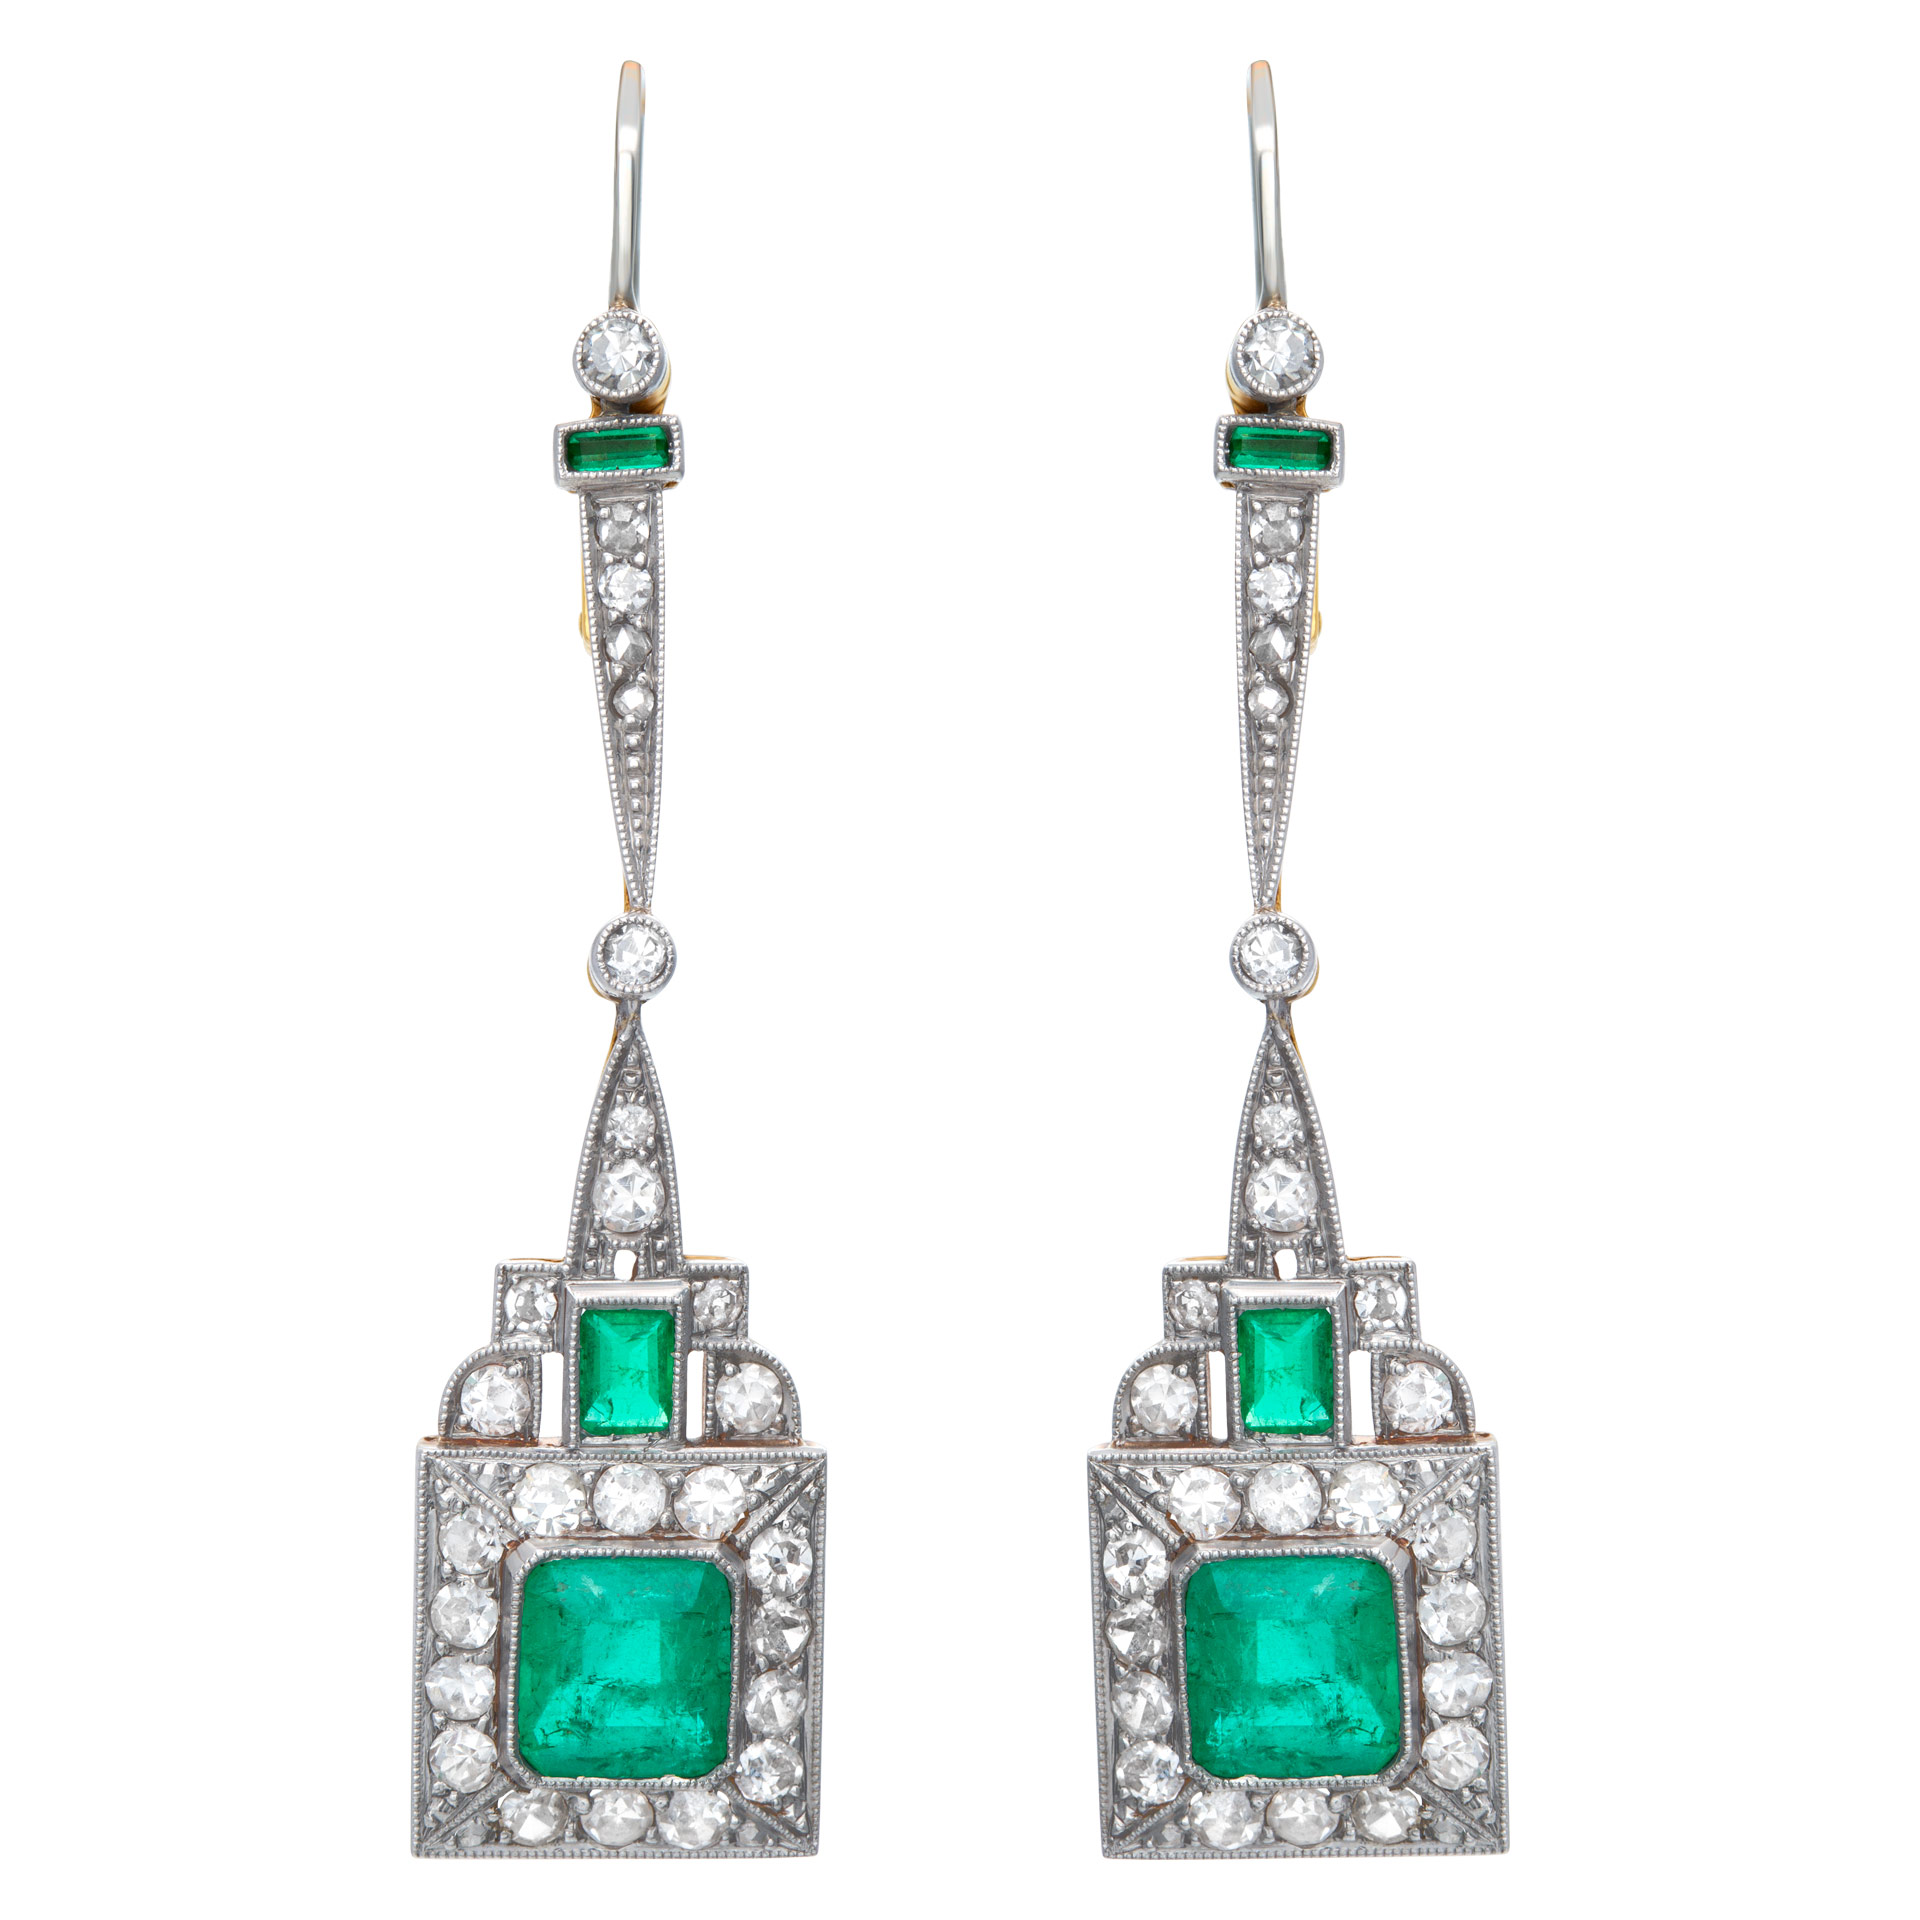 Vintage dangling emerald & diamonds earrings set in 18K yellow & white gold